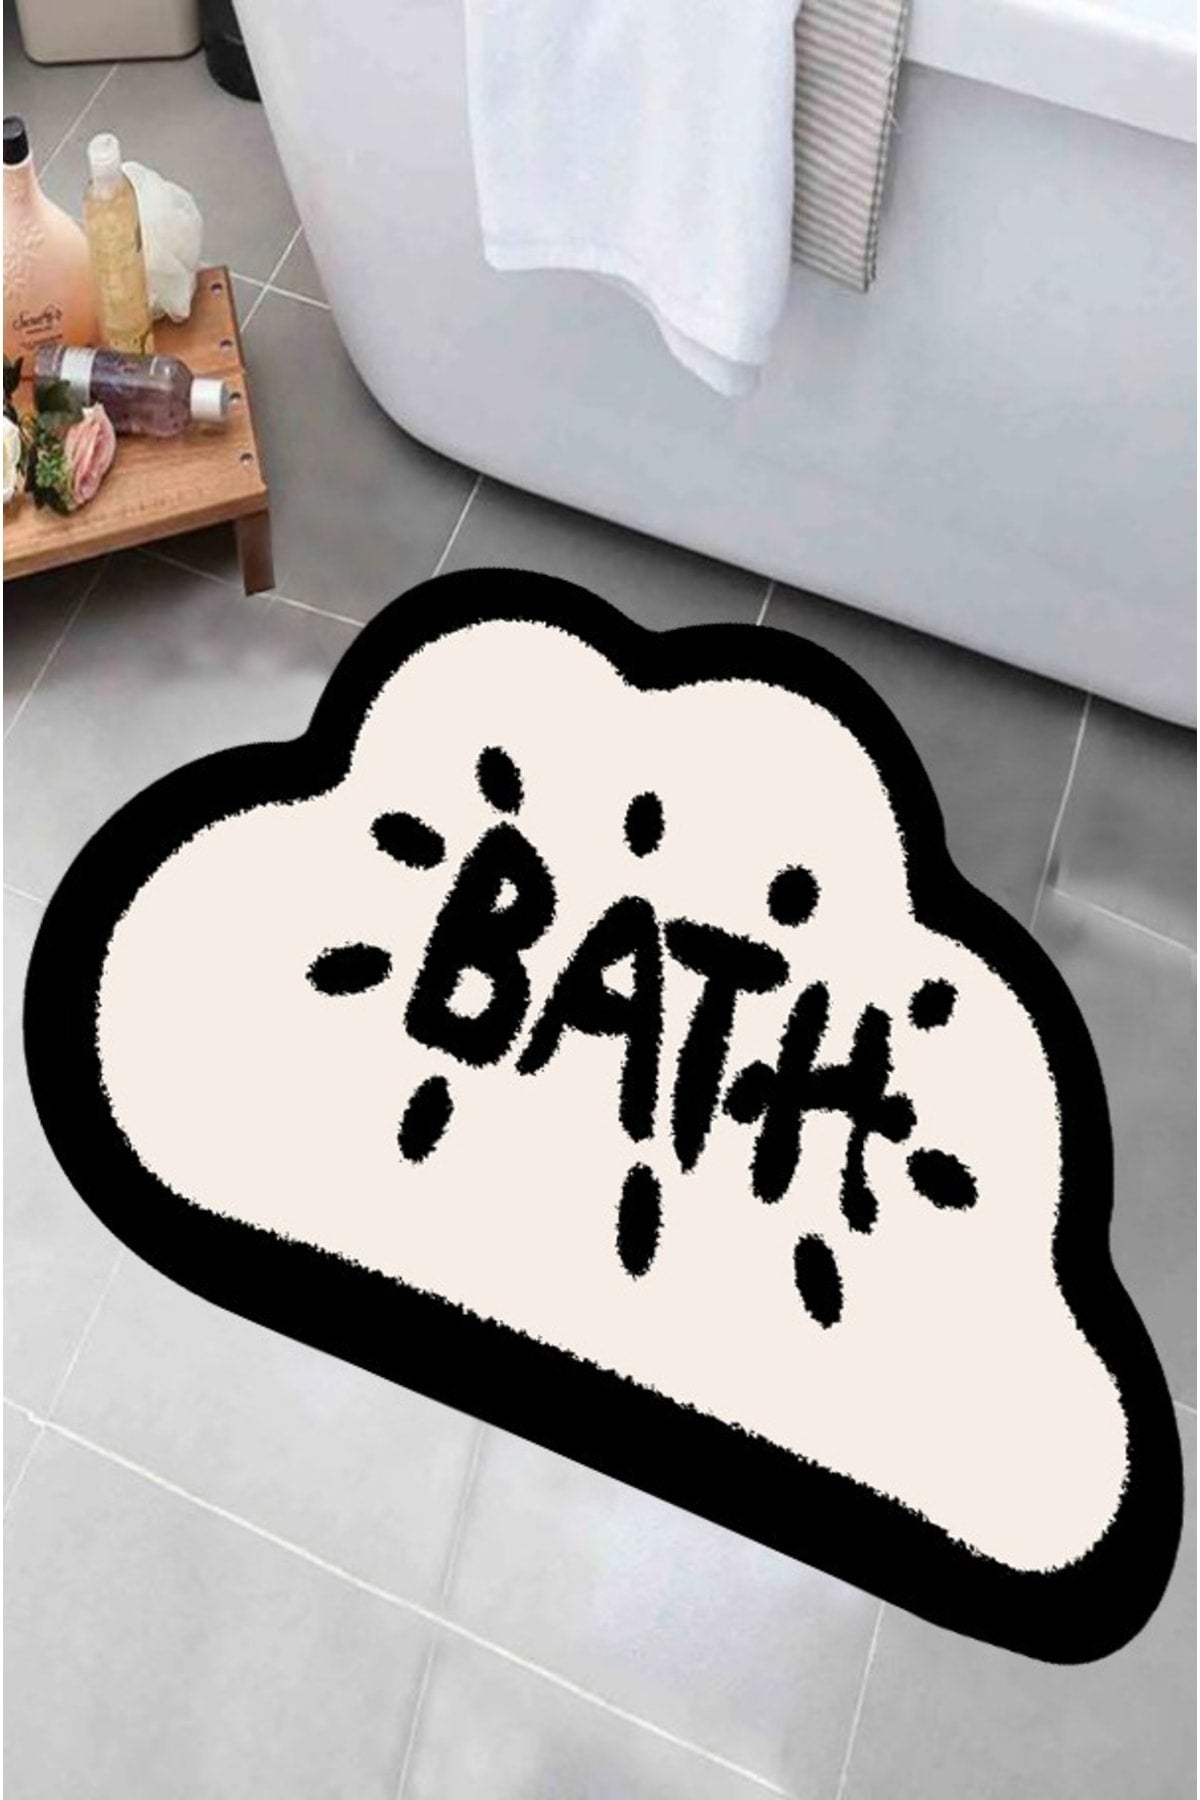 Bino BINO Loofah Non-Slip Bath Mat for Tub, Light Grey - Quick